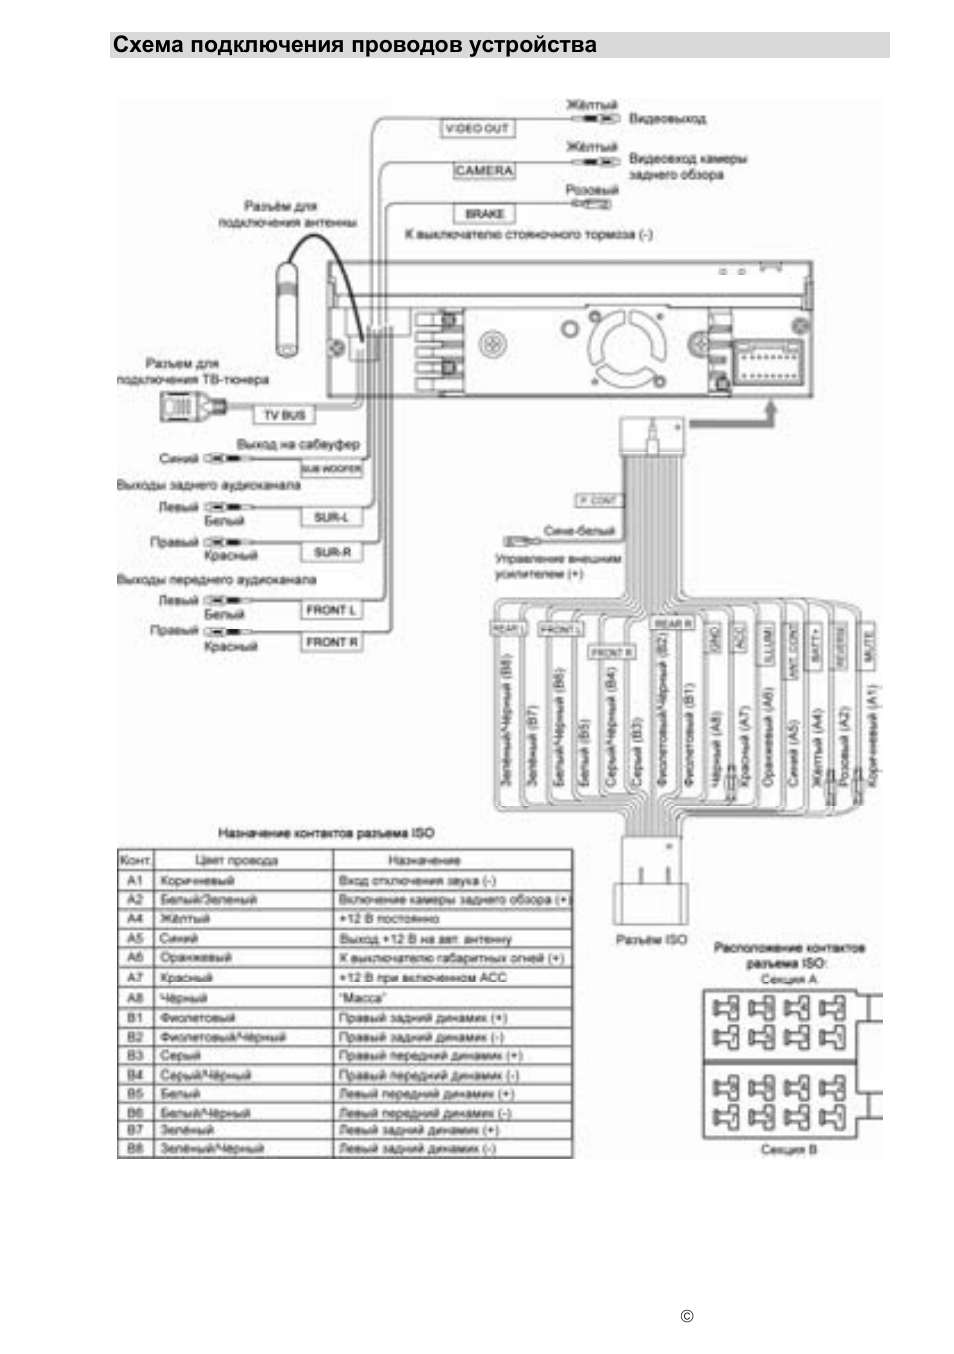 Prology MDD-719T: Схема подключения проводов устройства